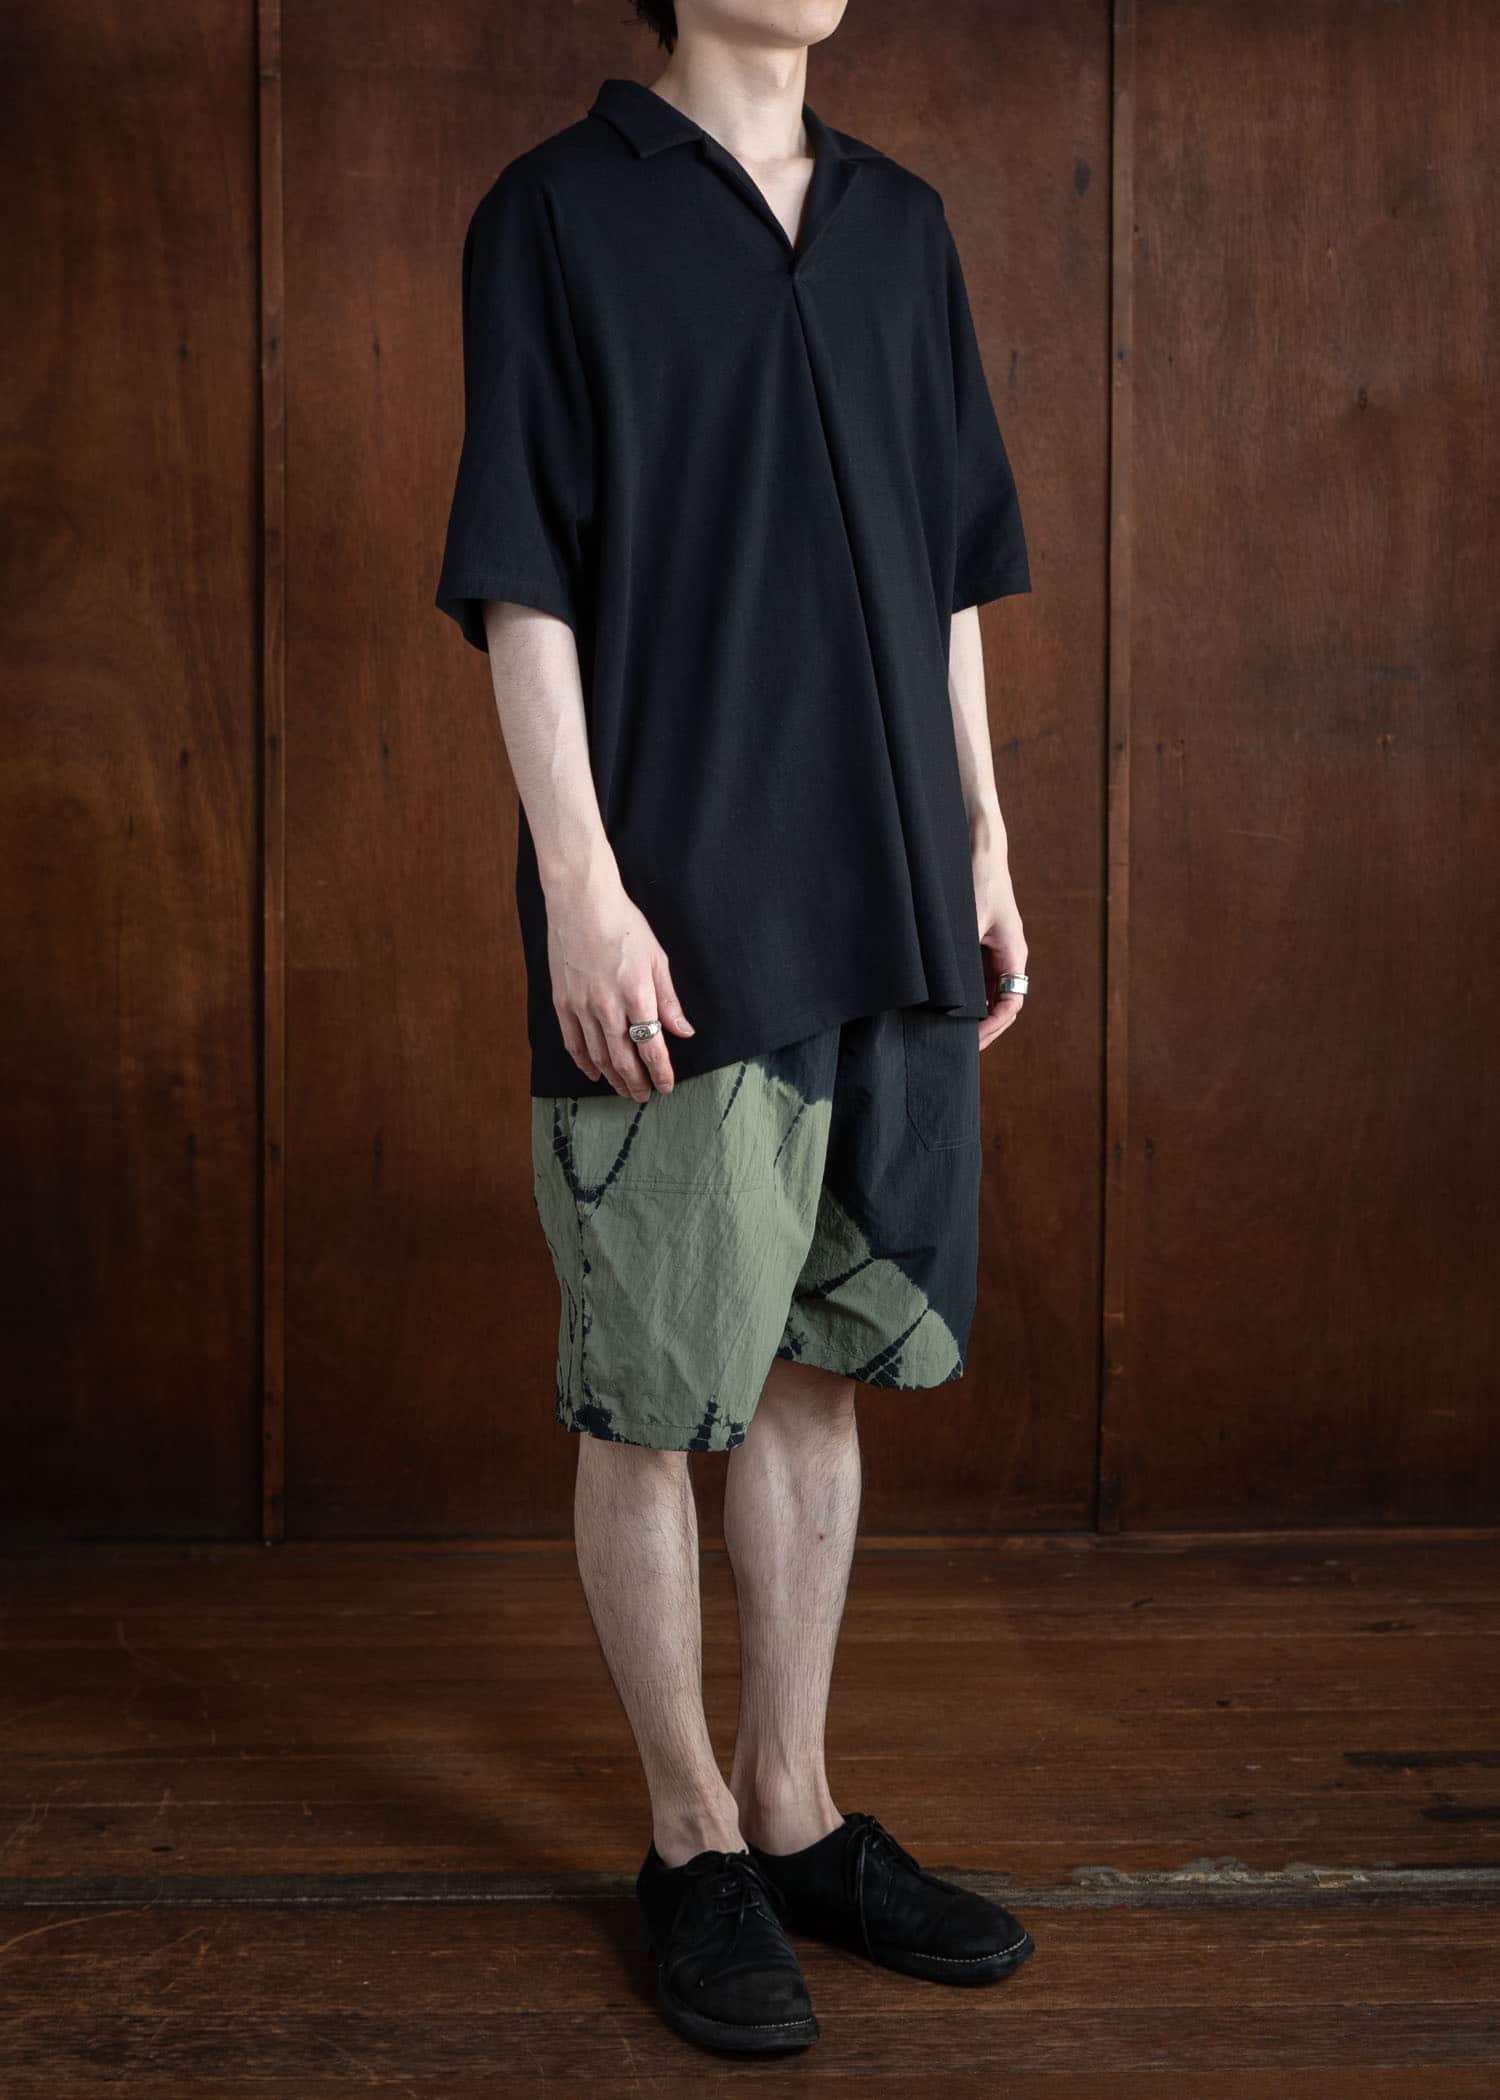 SUZUSAN Recycled Ripstop Nylon Shorts Tesuji Yoroidan Shibori """"Diagonal"""" Black x Khaki